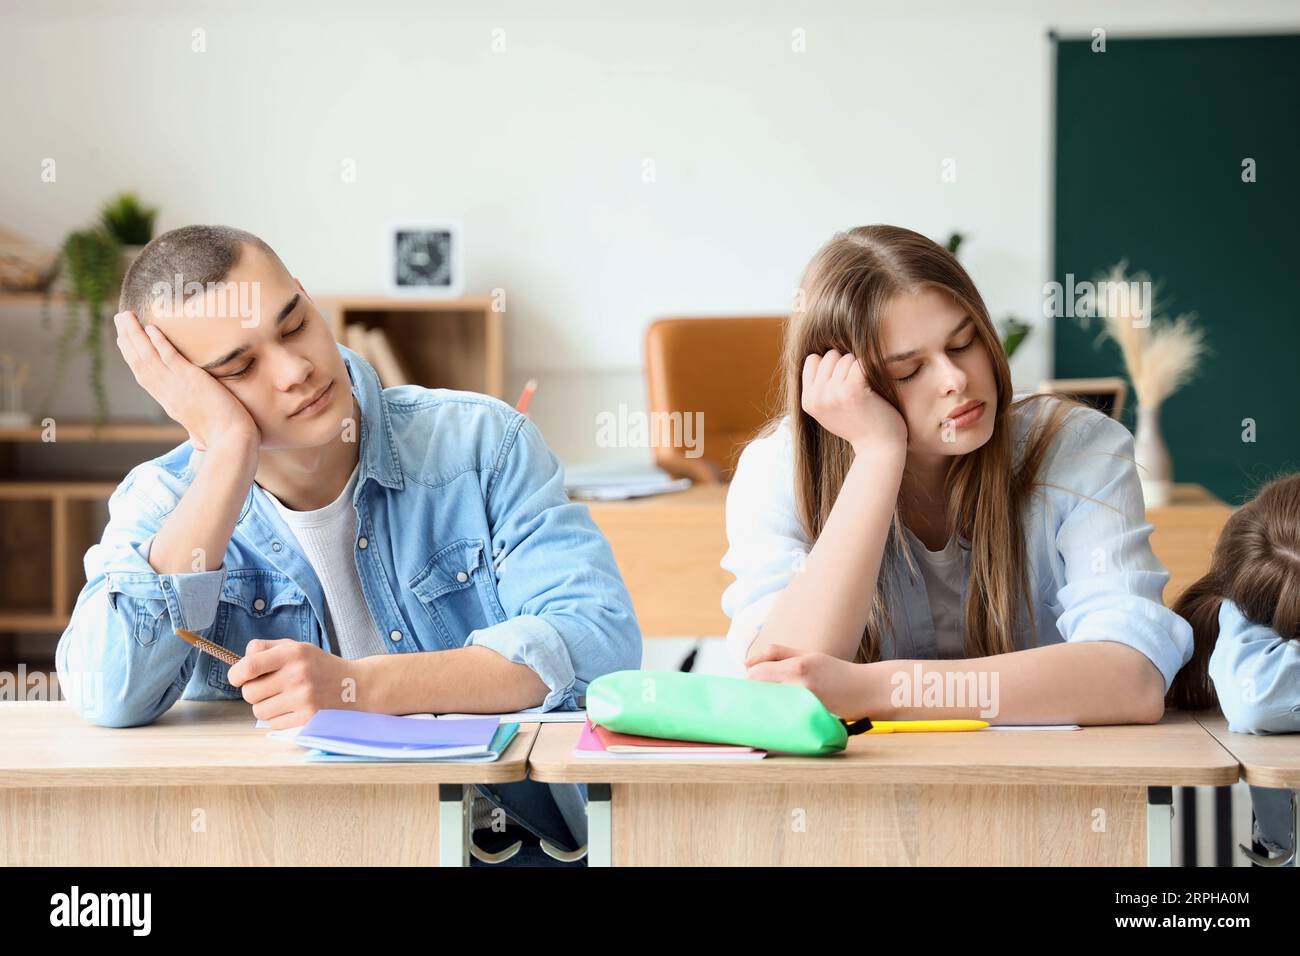 Tired sleepy classmates sitting at desks in classroom Stock Photo